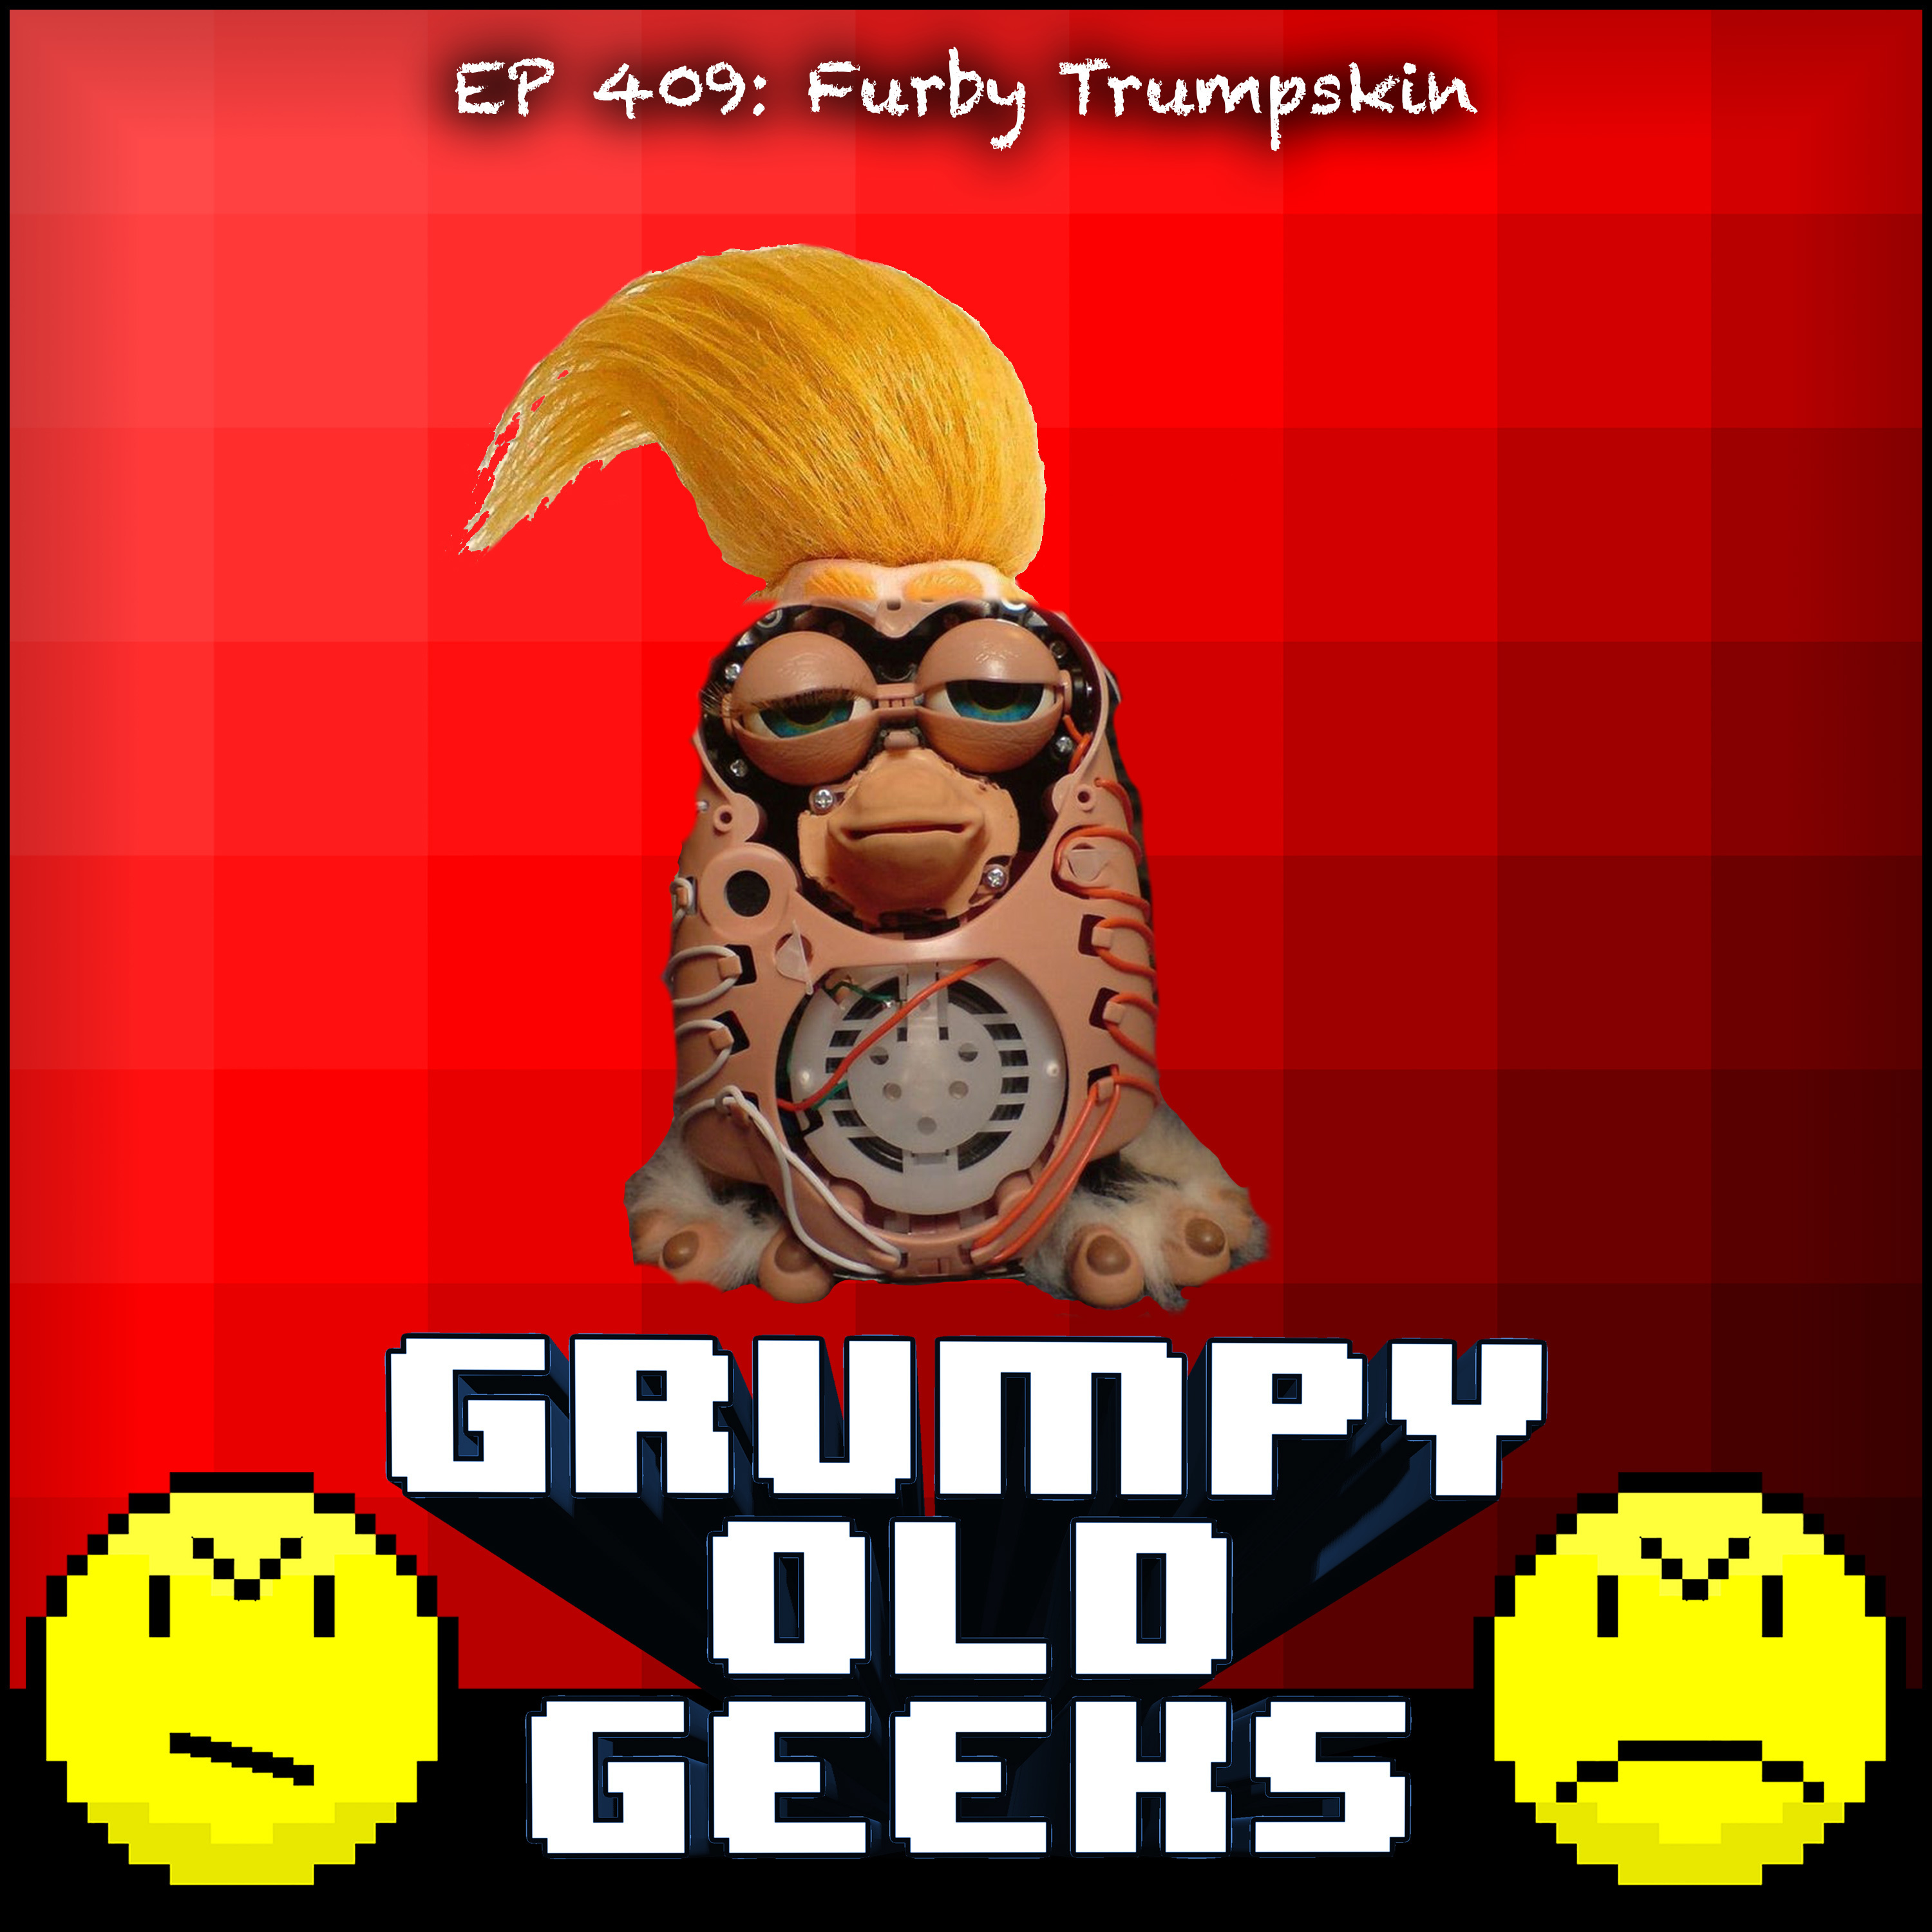 409: Furby Trumpskin Image